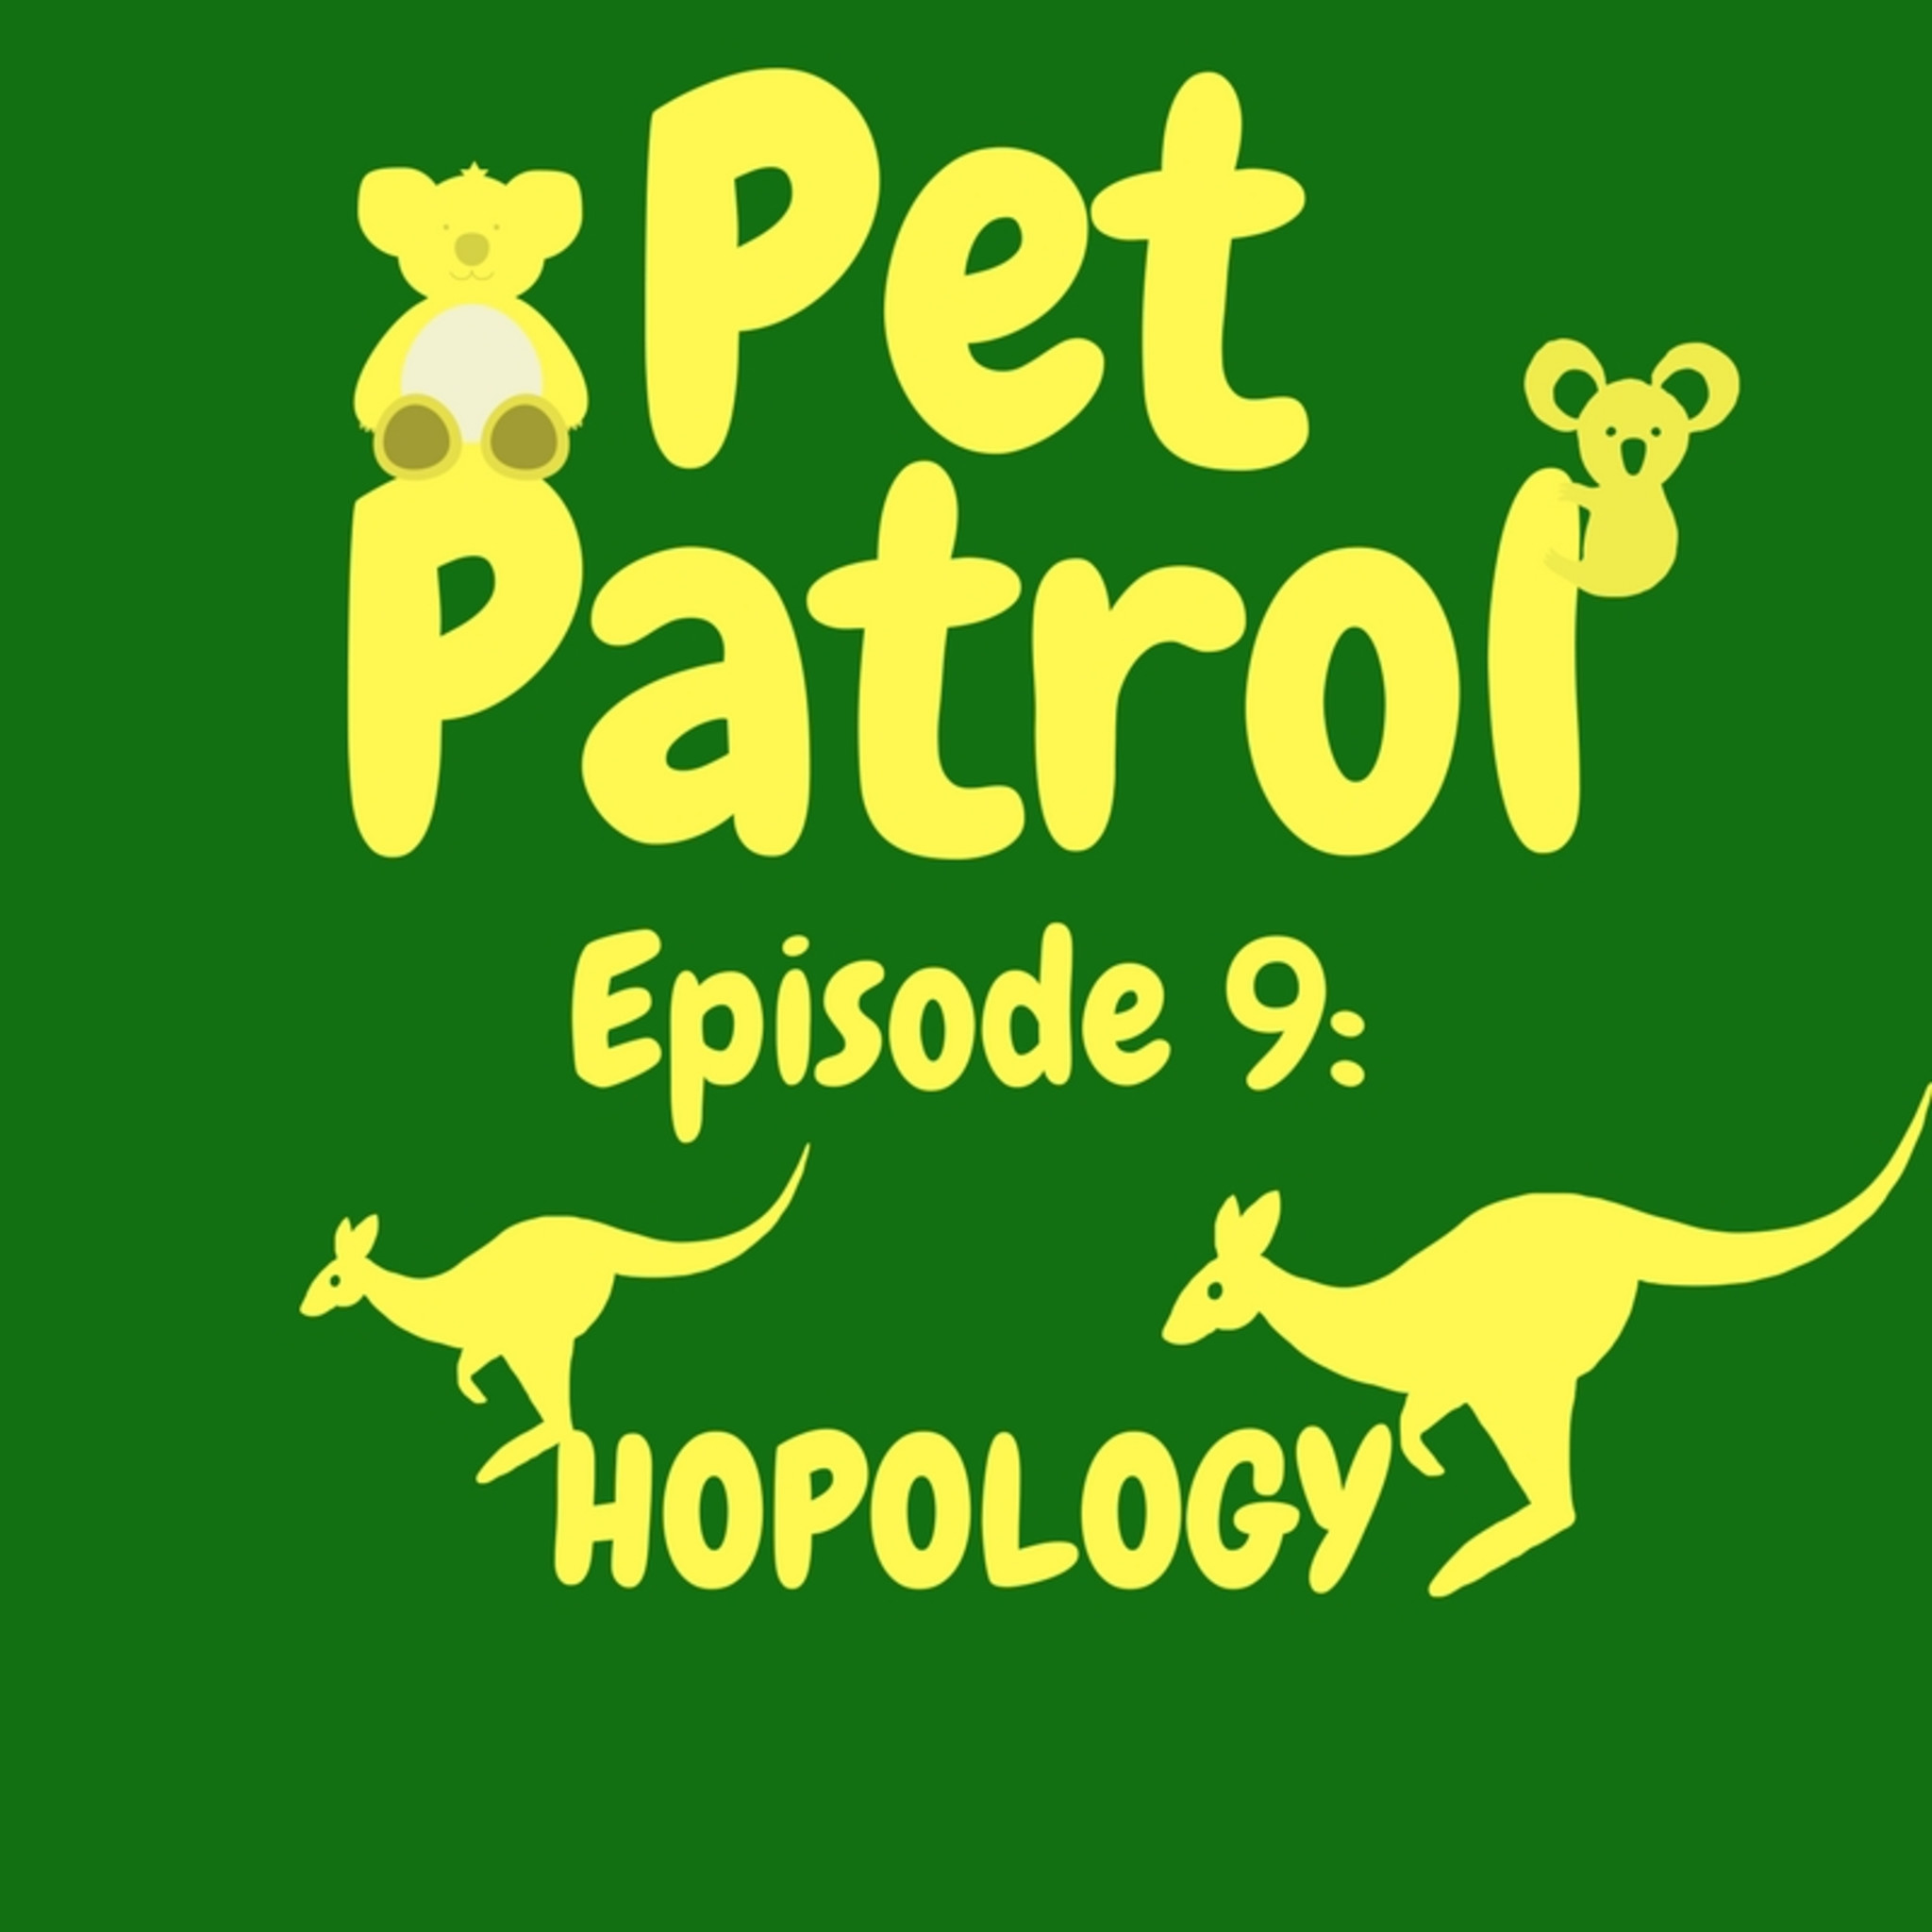 Hopology - Marsupial stories